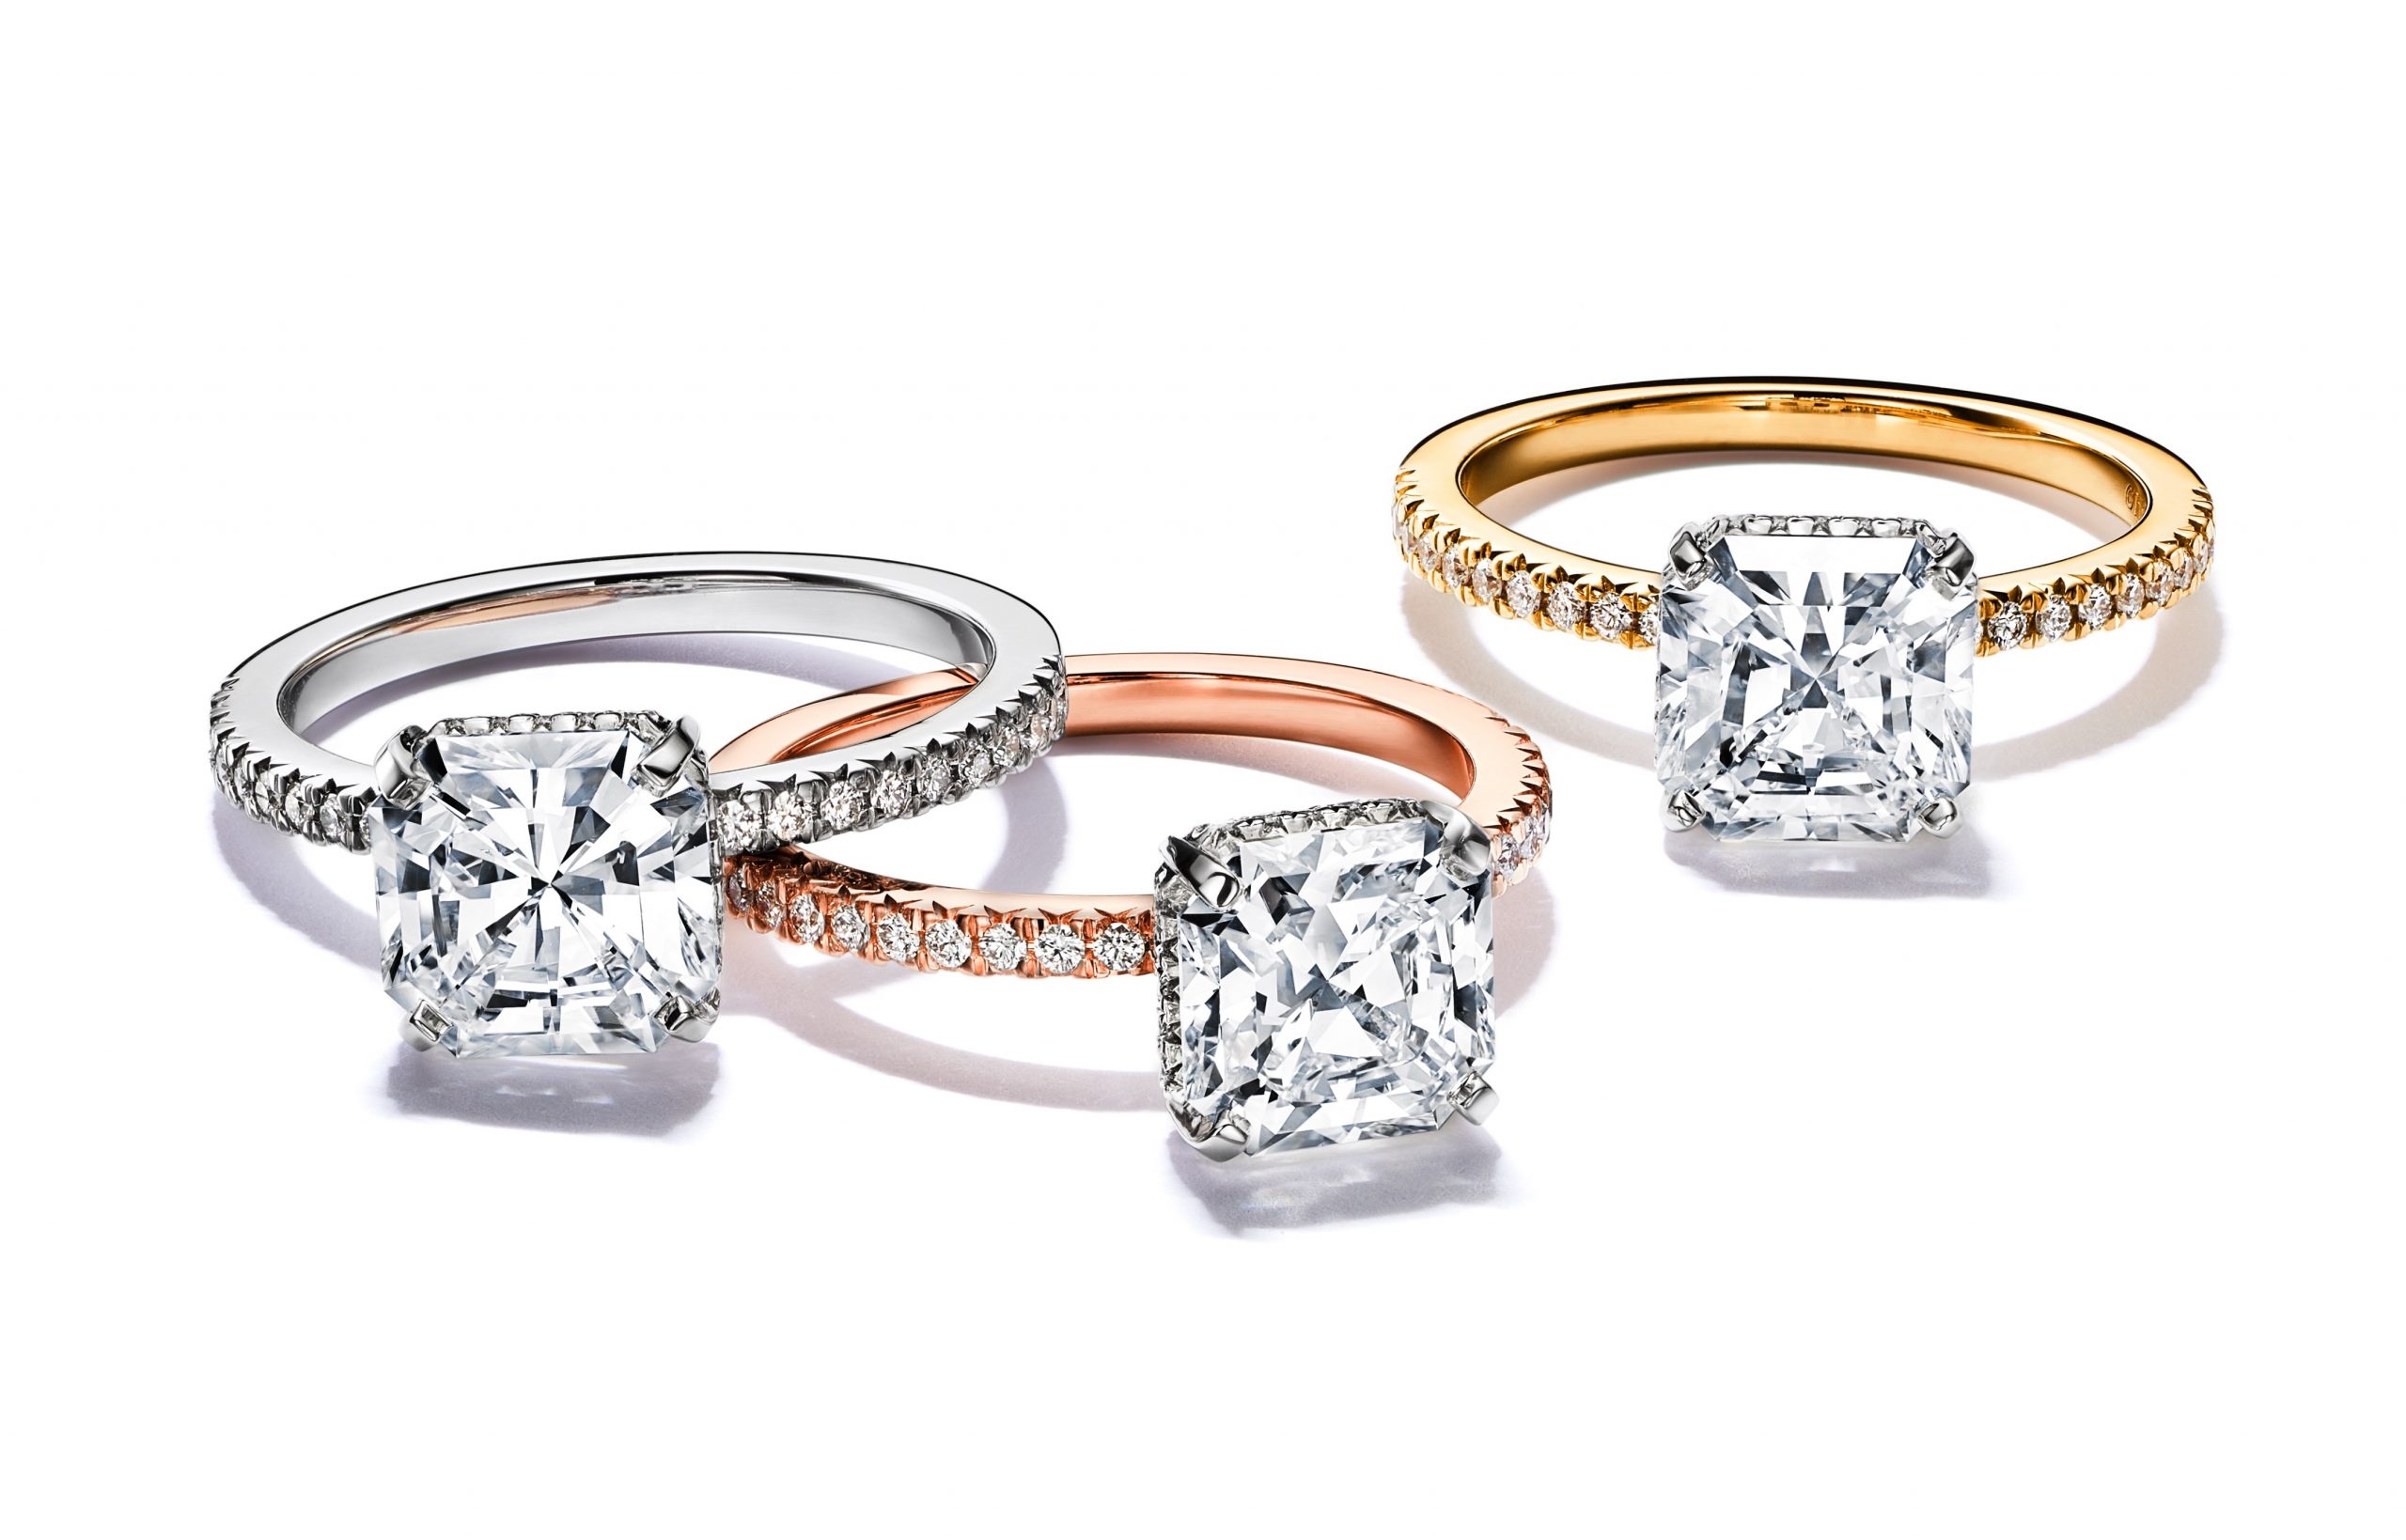 Tiffany True® engagement rings